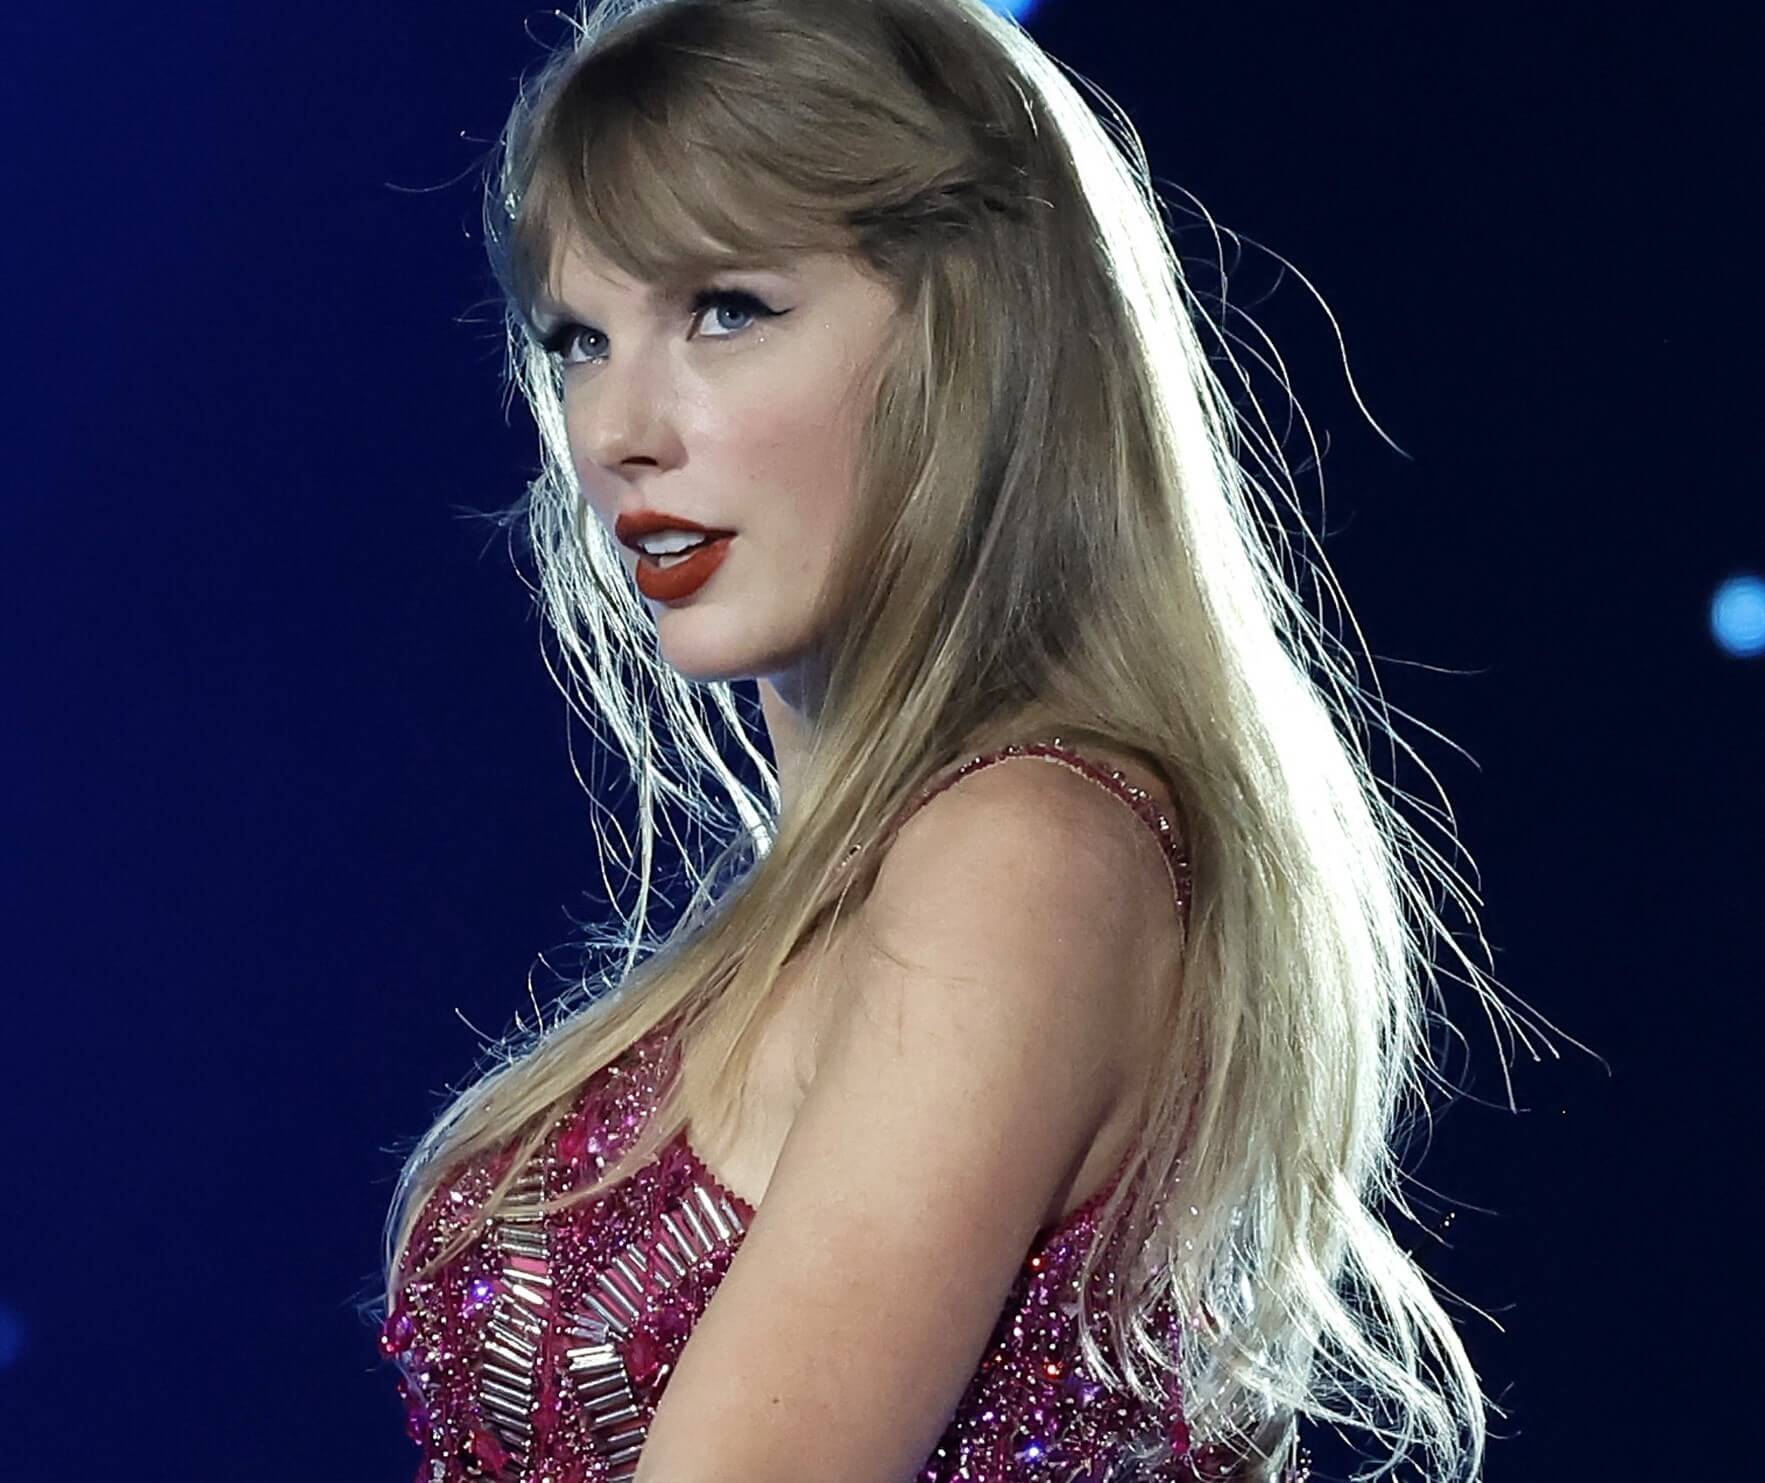 "Love Story" singer Taylor Swift wearing lipstick